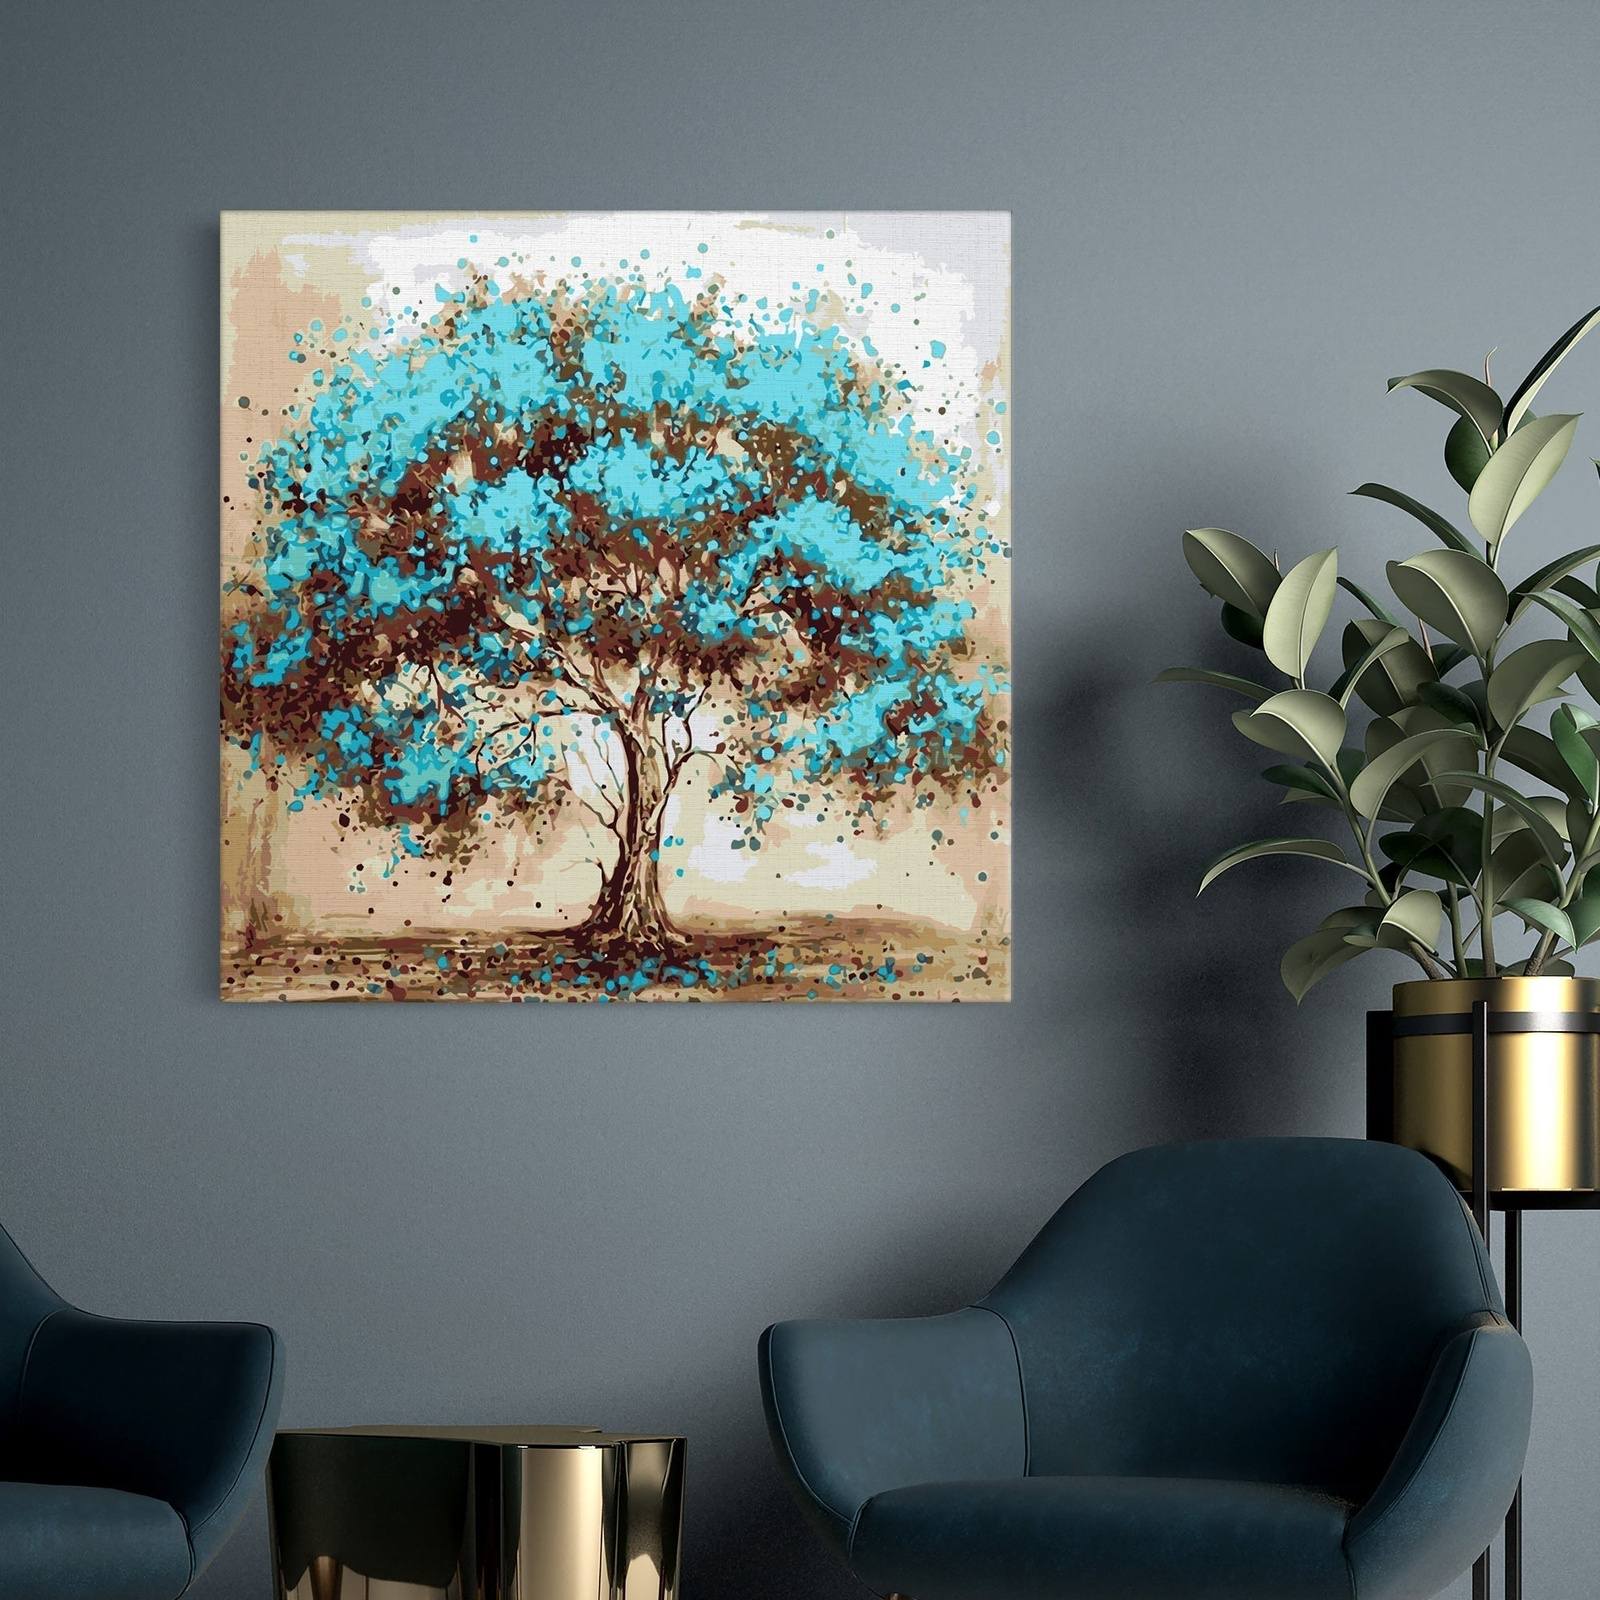 Mėlynasis Medis (Cdc0178)